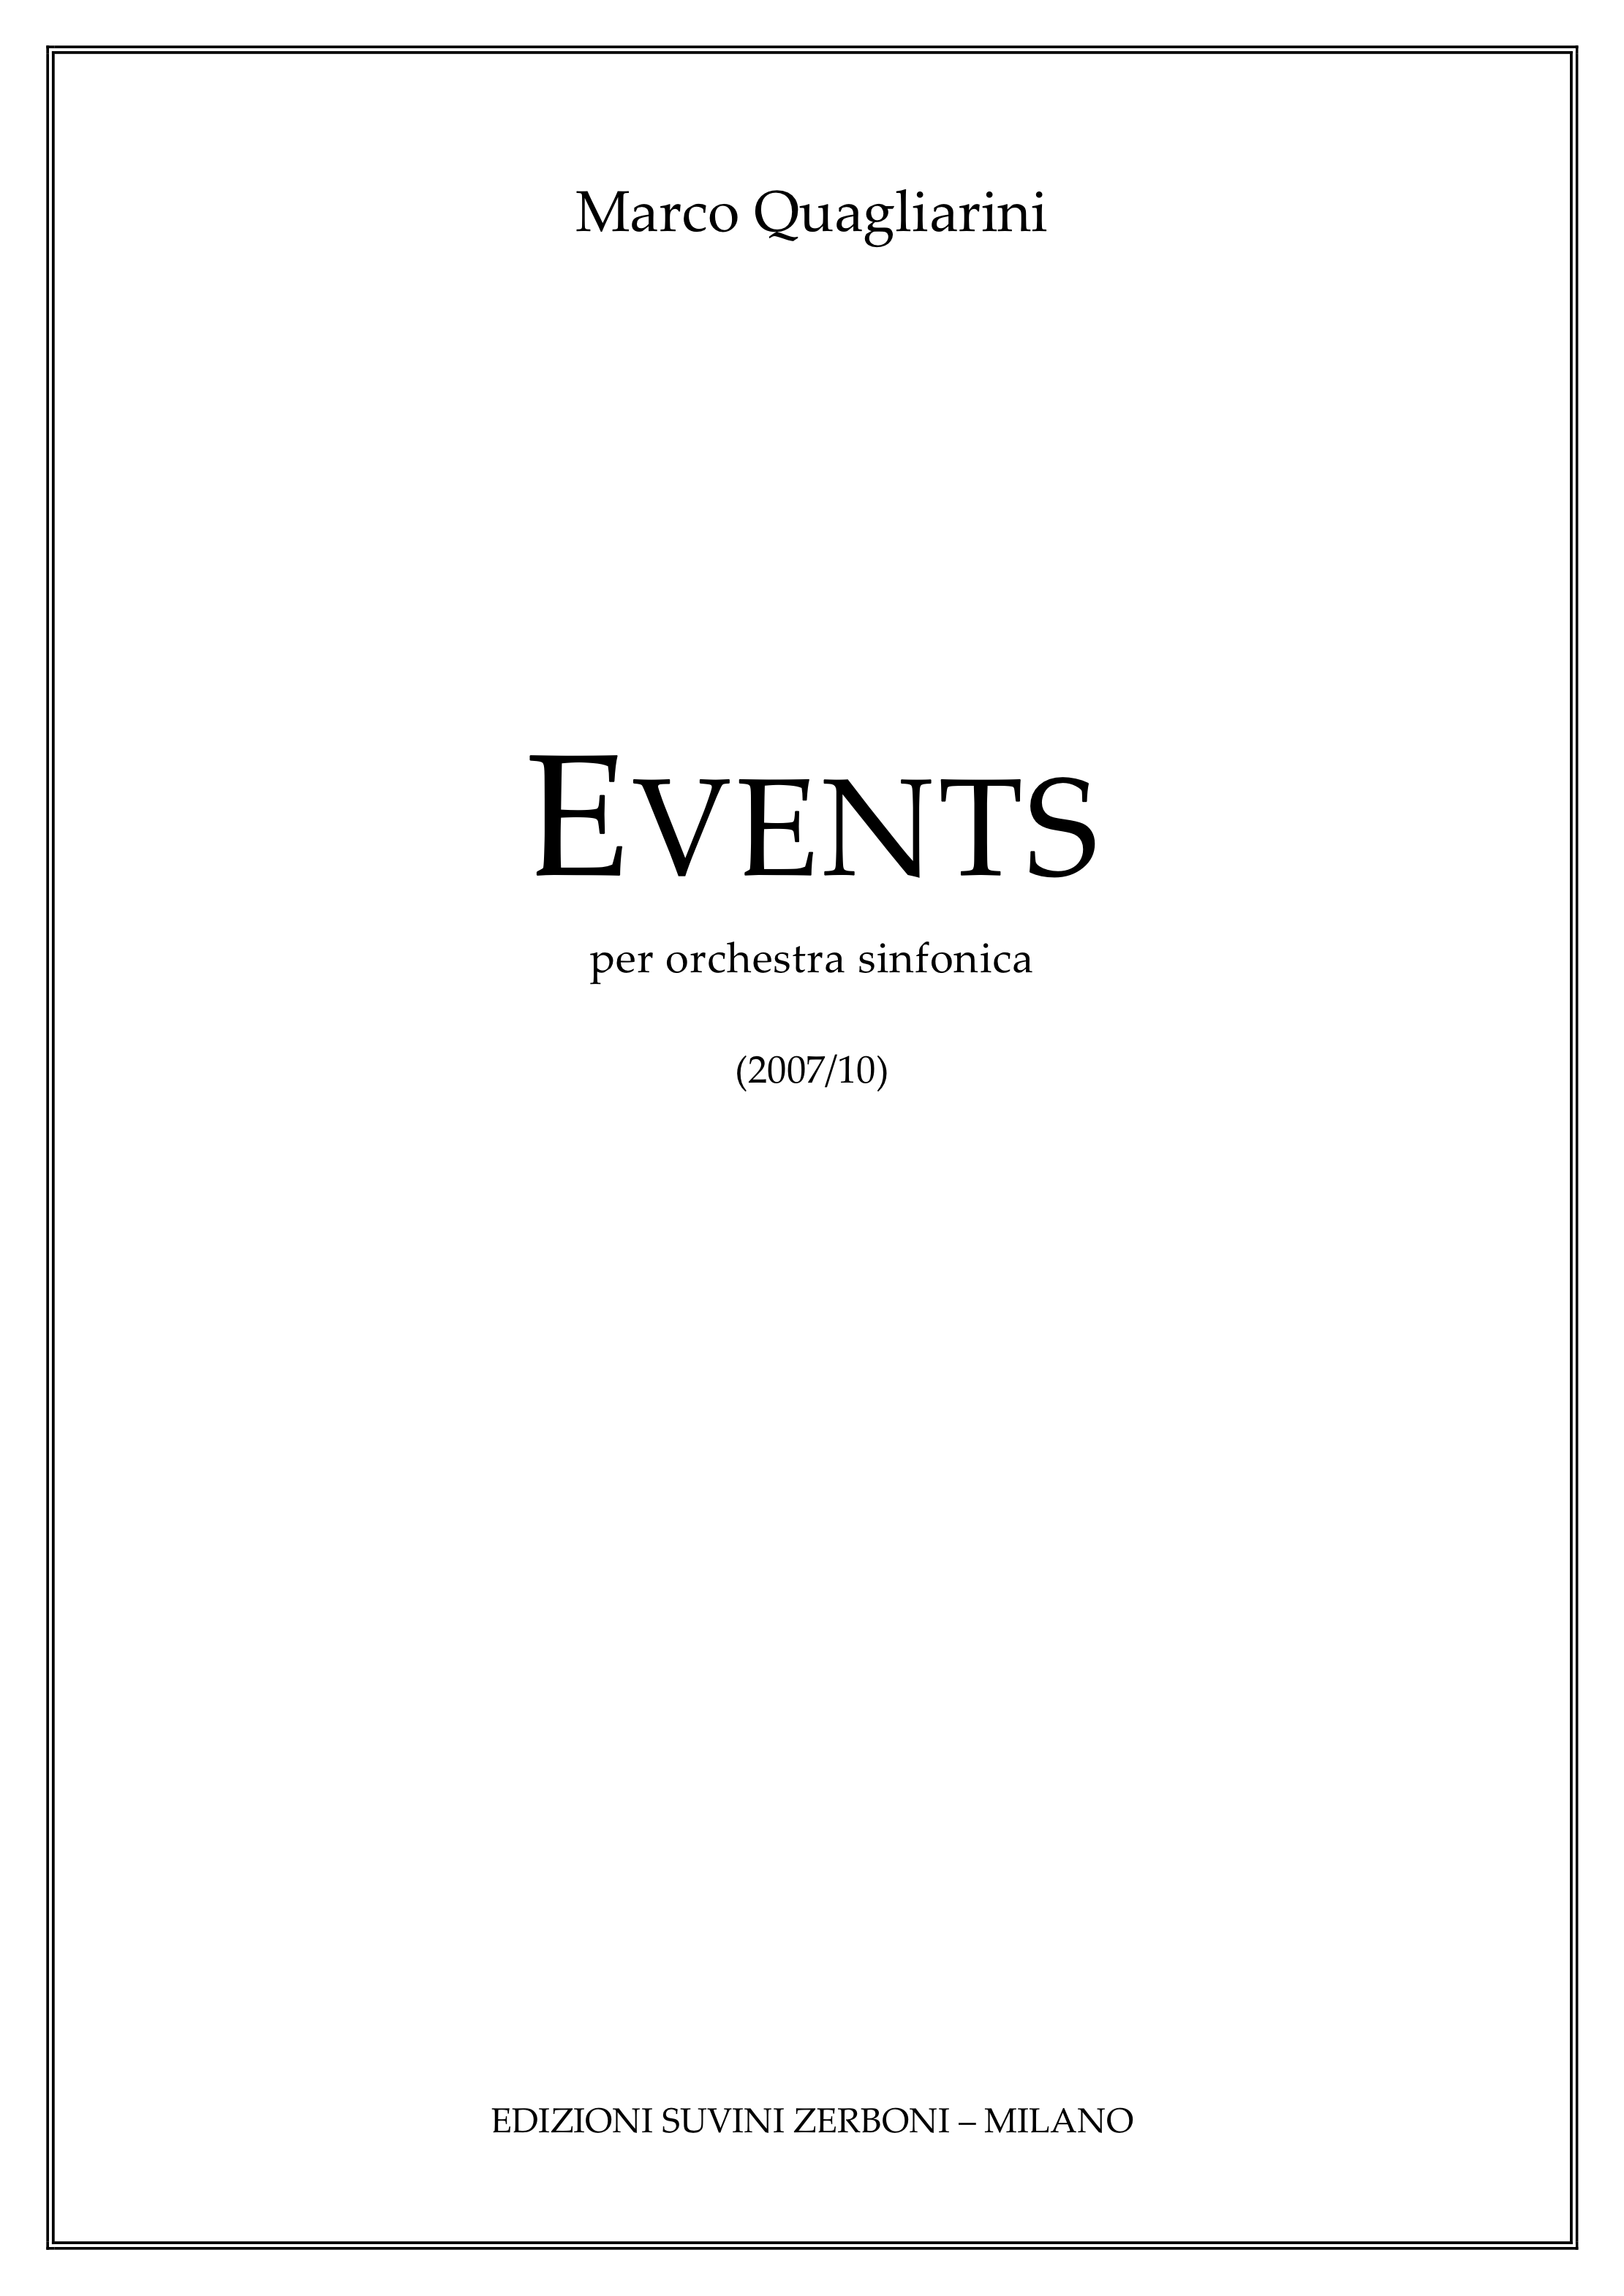 Events_Quagliarini 1